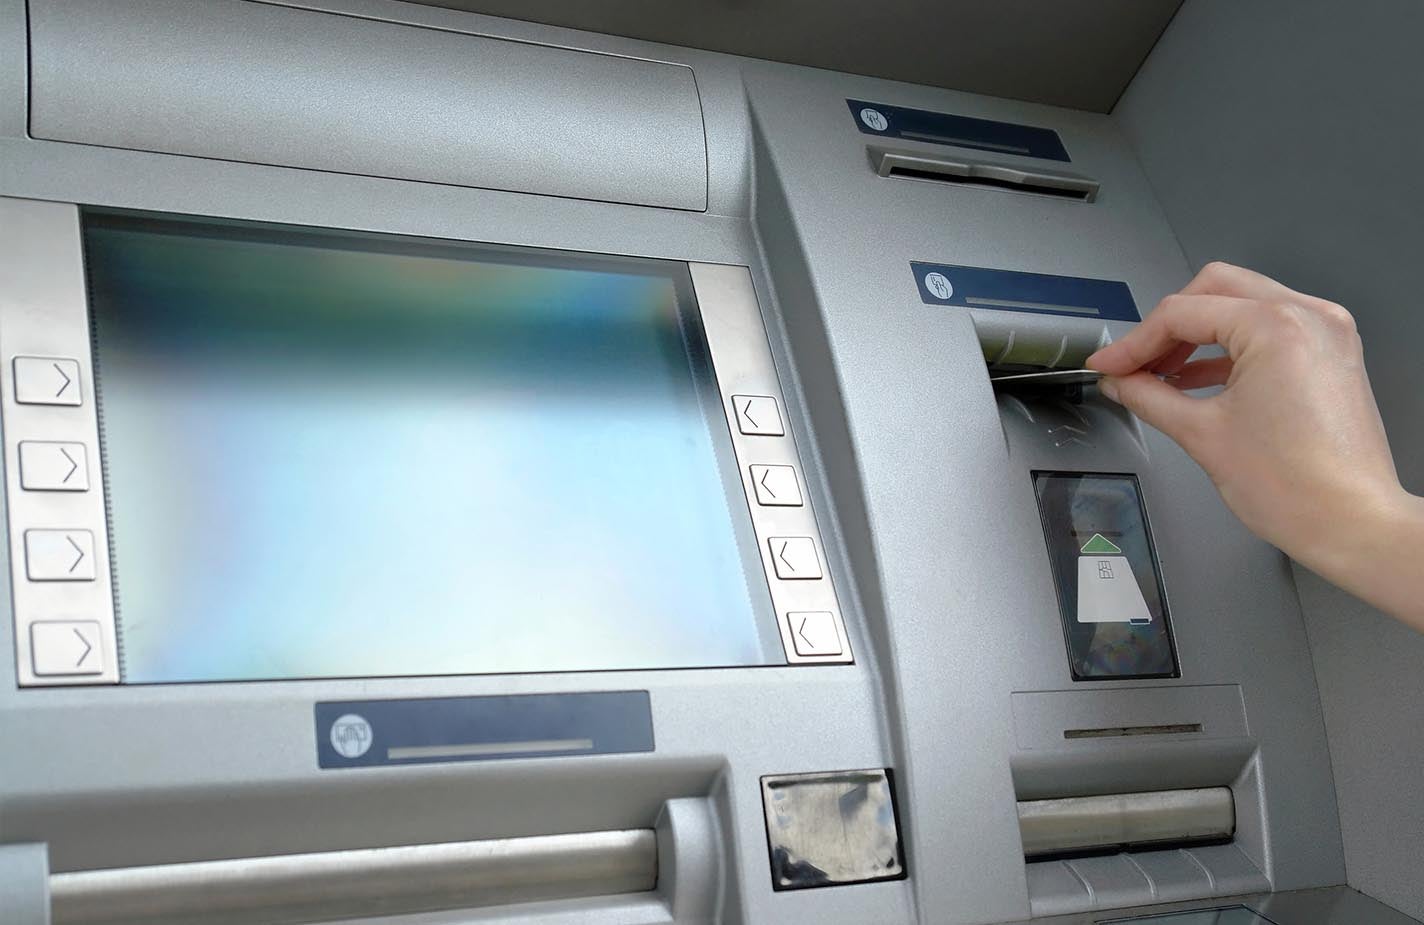 Avoiding fees at an ATM